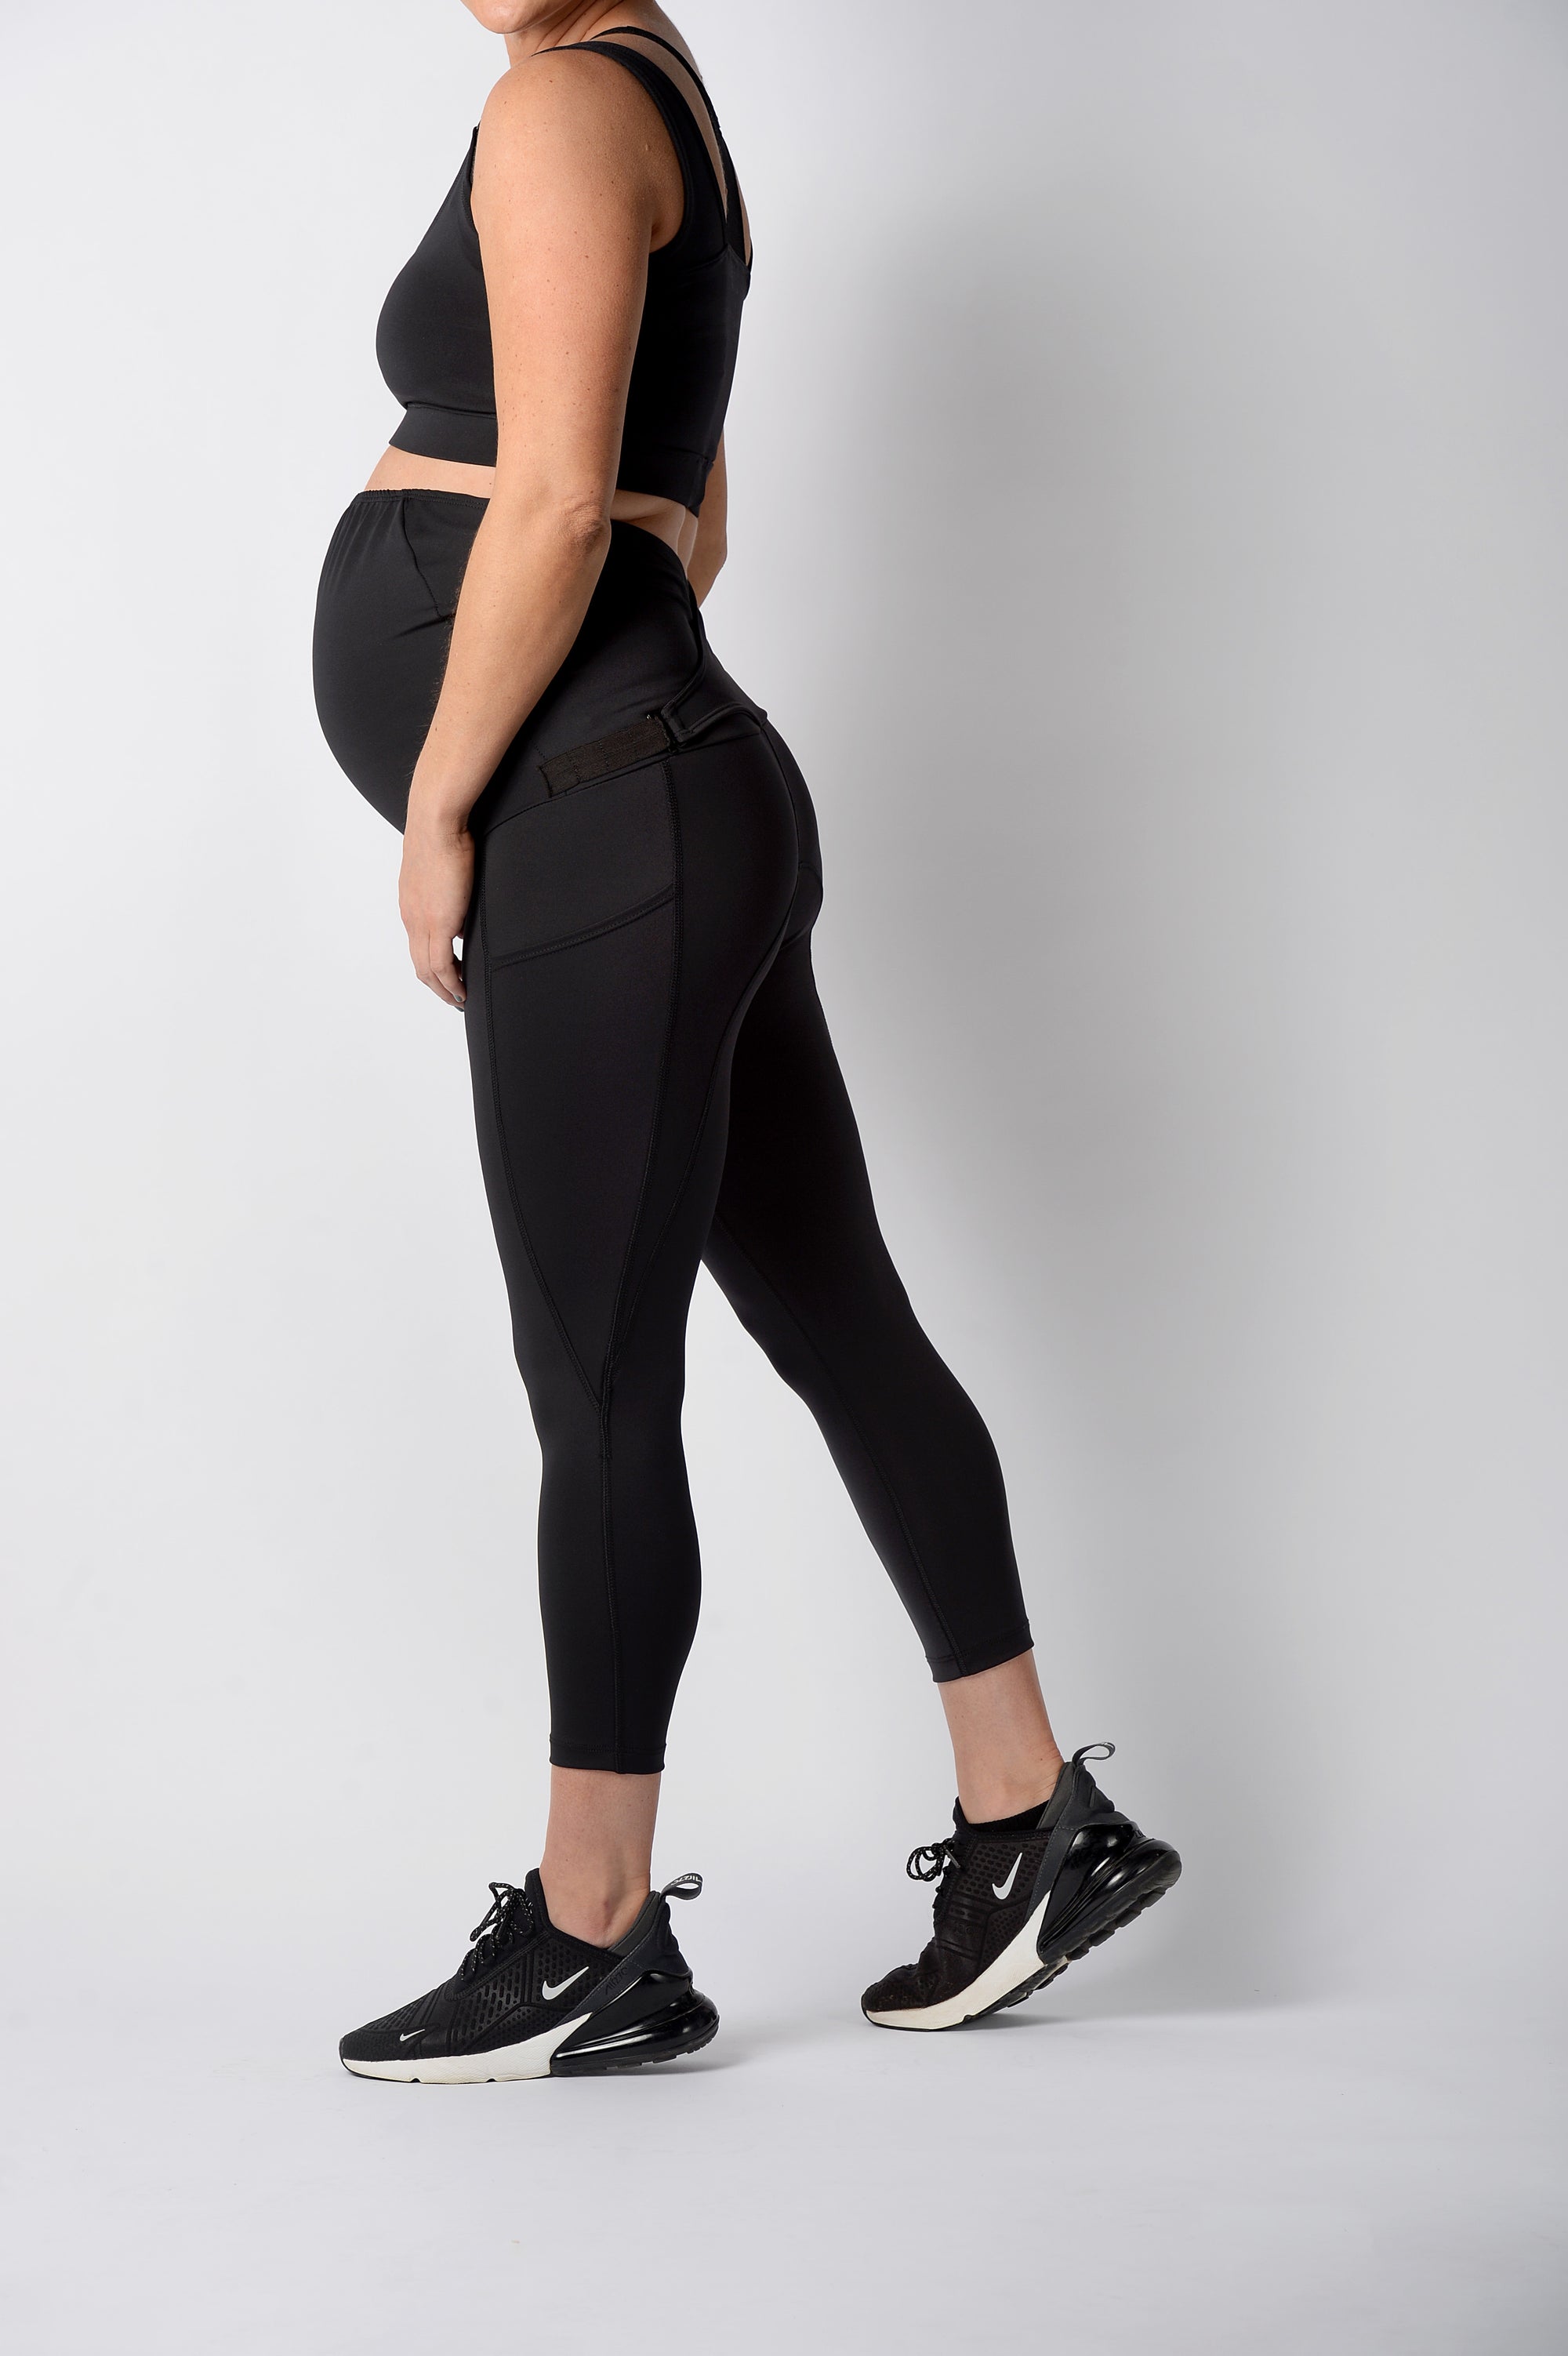 Mia Tango - Maternity Activewear - Monica Lee